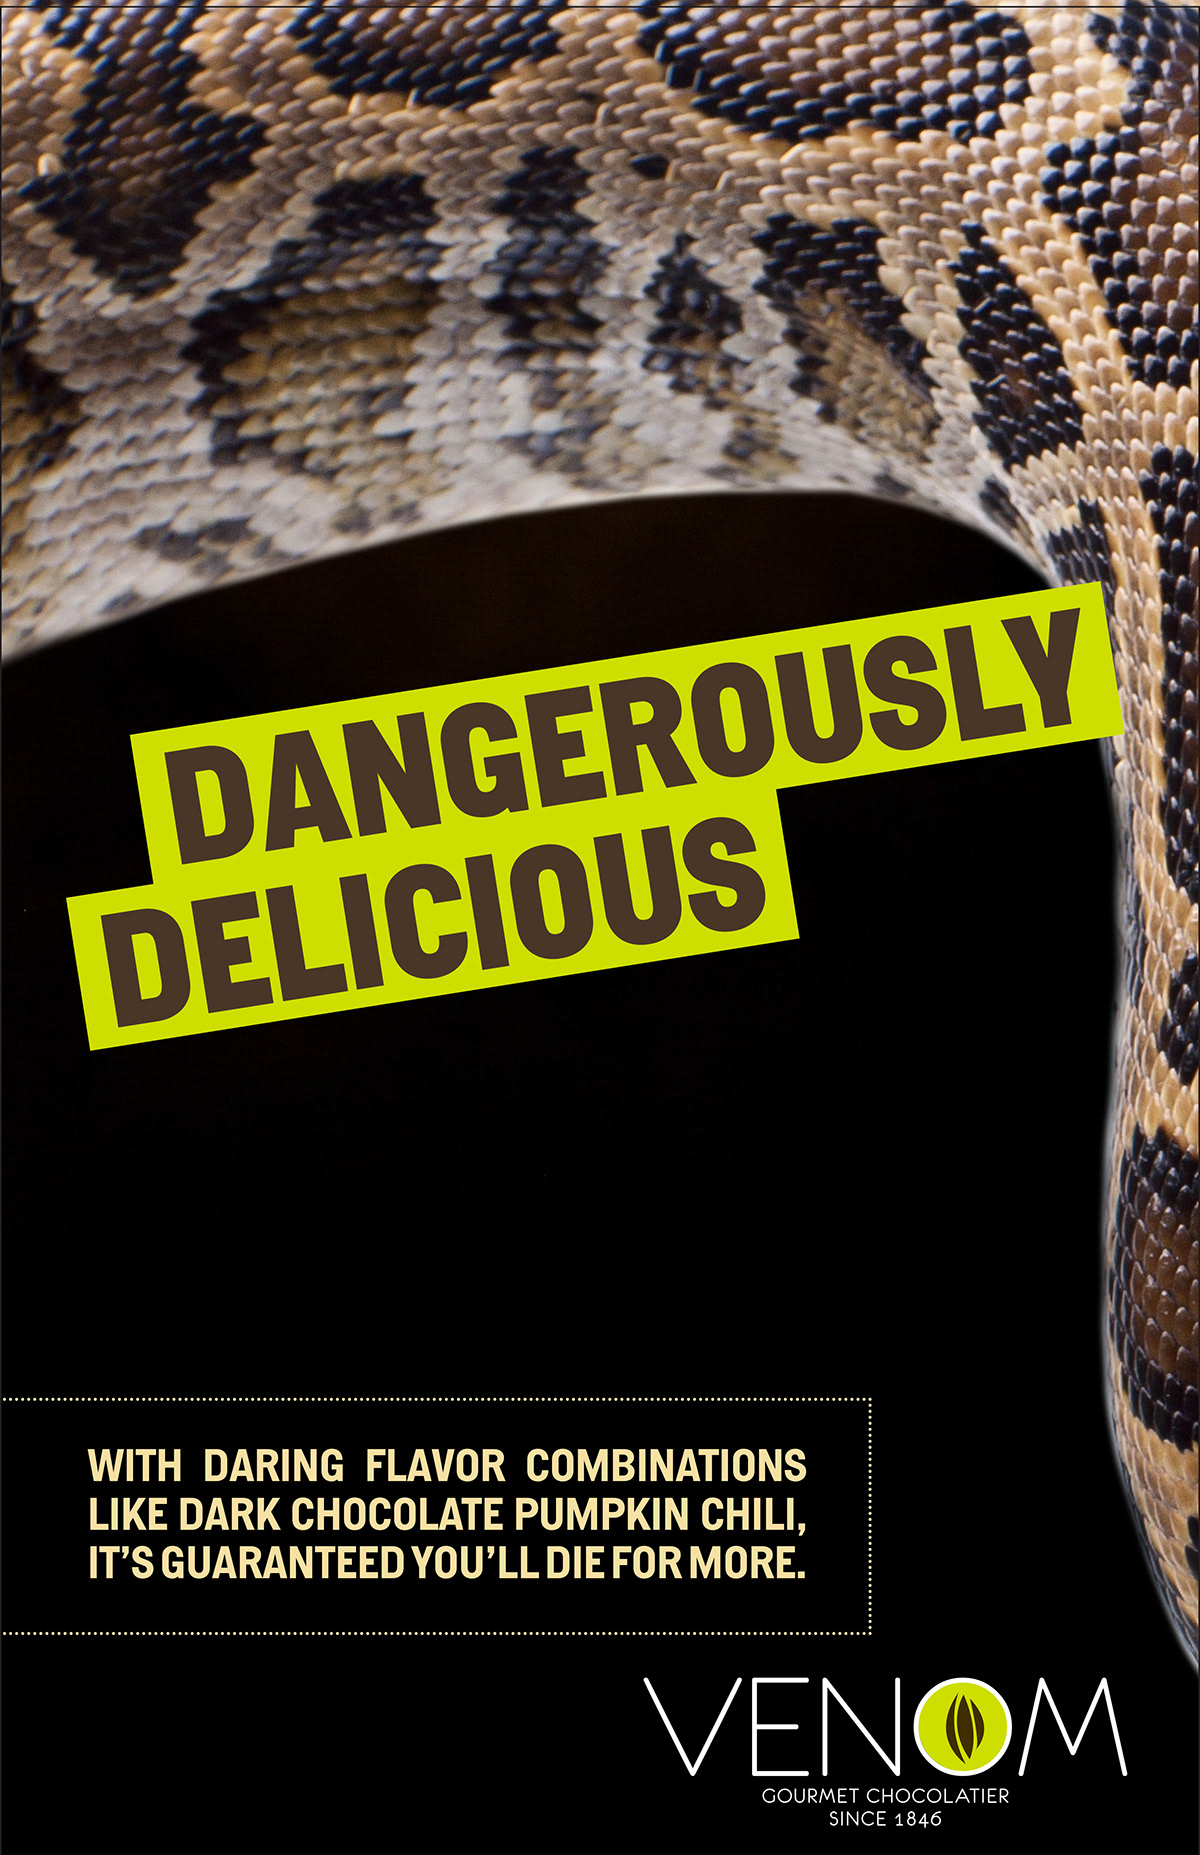 chocolate snakes snake jungle venom fair trade company godiva Lindt green poster subway ad